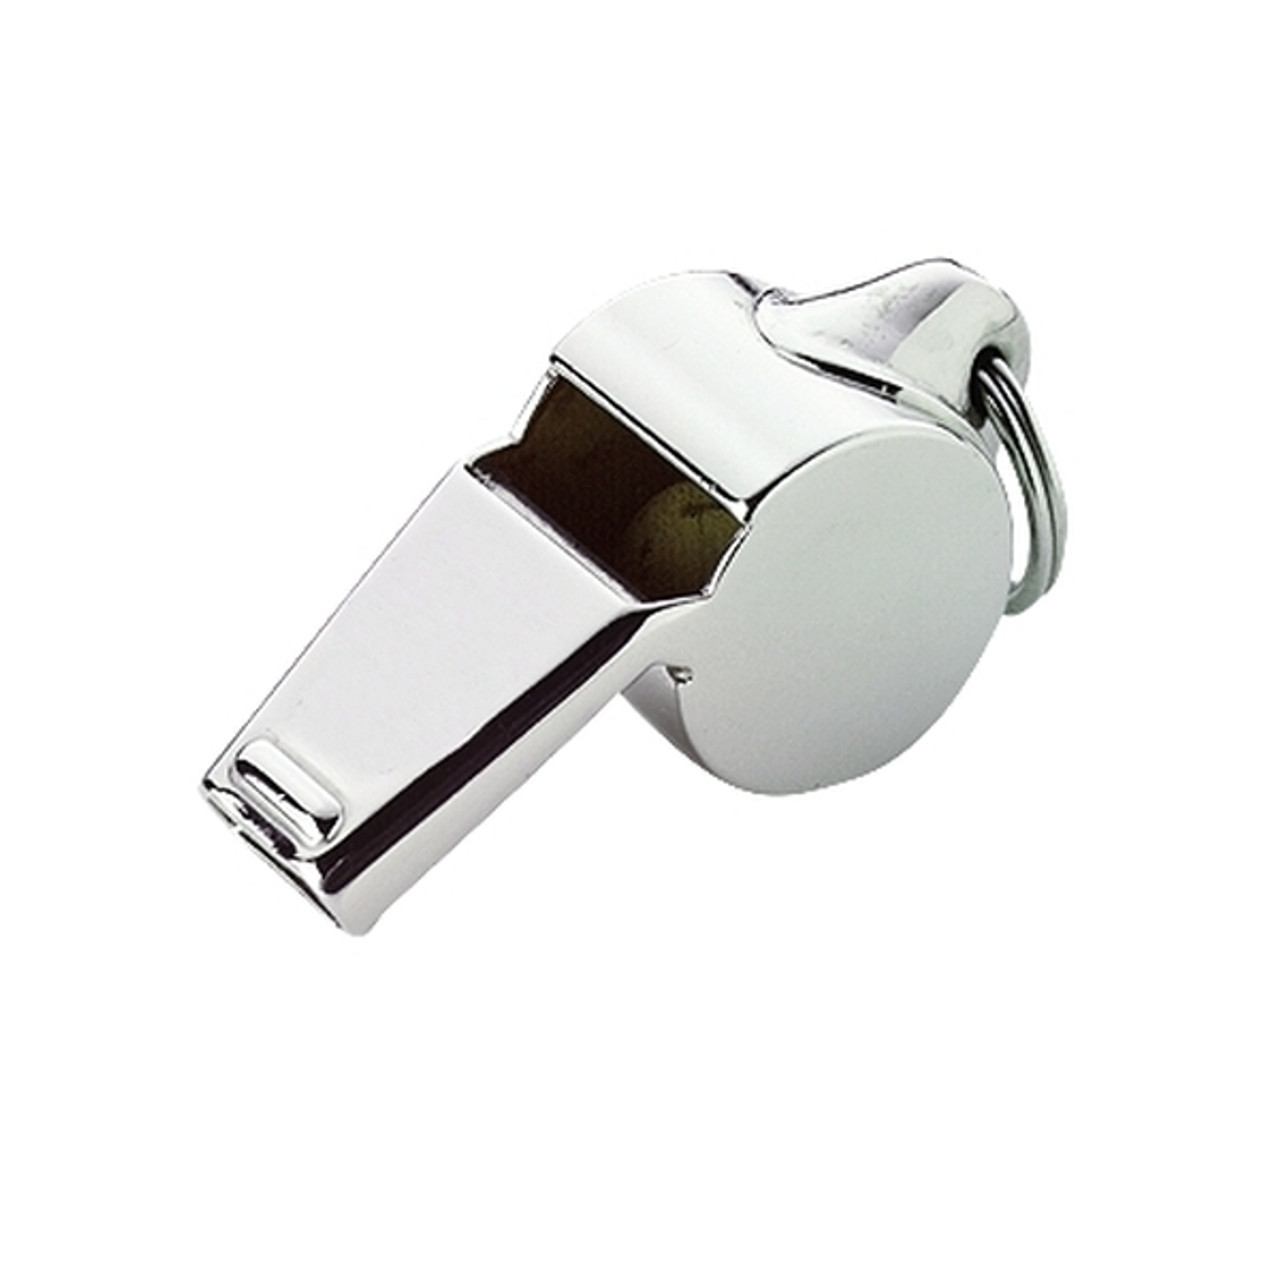 Whistle Keychain Kit - Gold